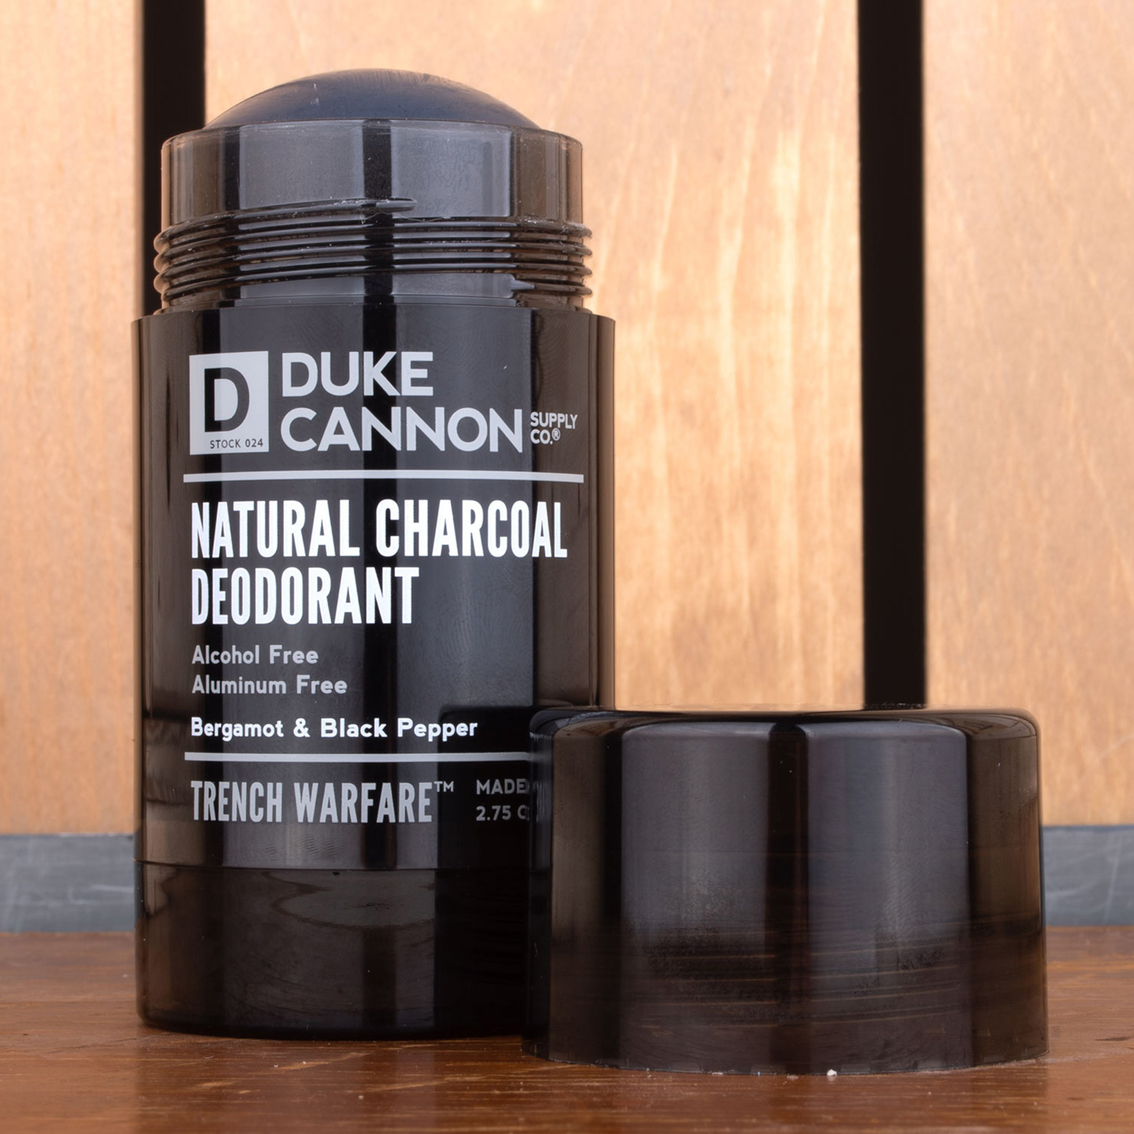 Duke Cannon Bergamot and Black Pepper Trench Warfare Natural Charcoal Deodorant - Image 3 of 3